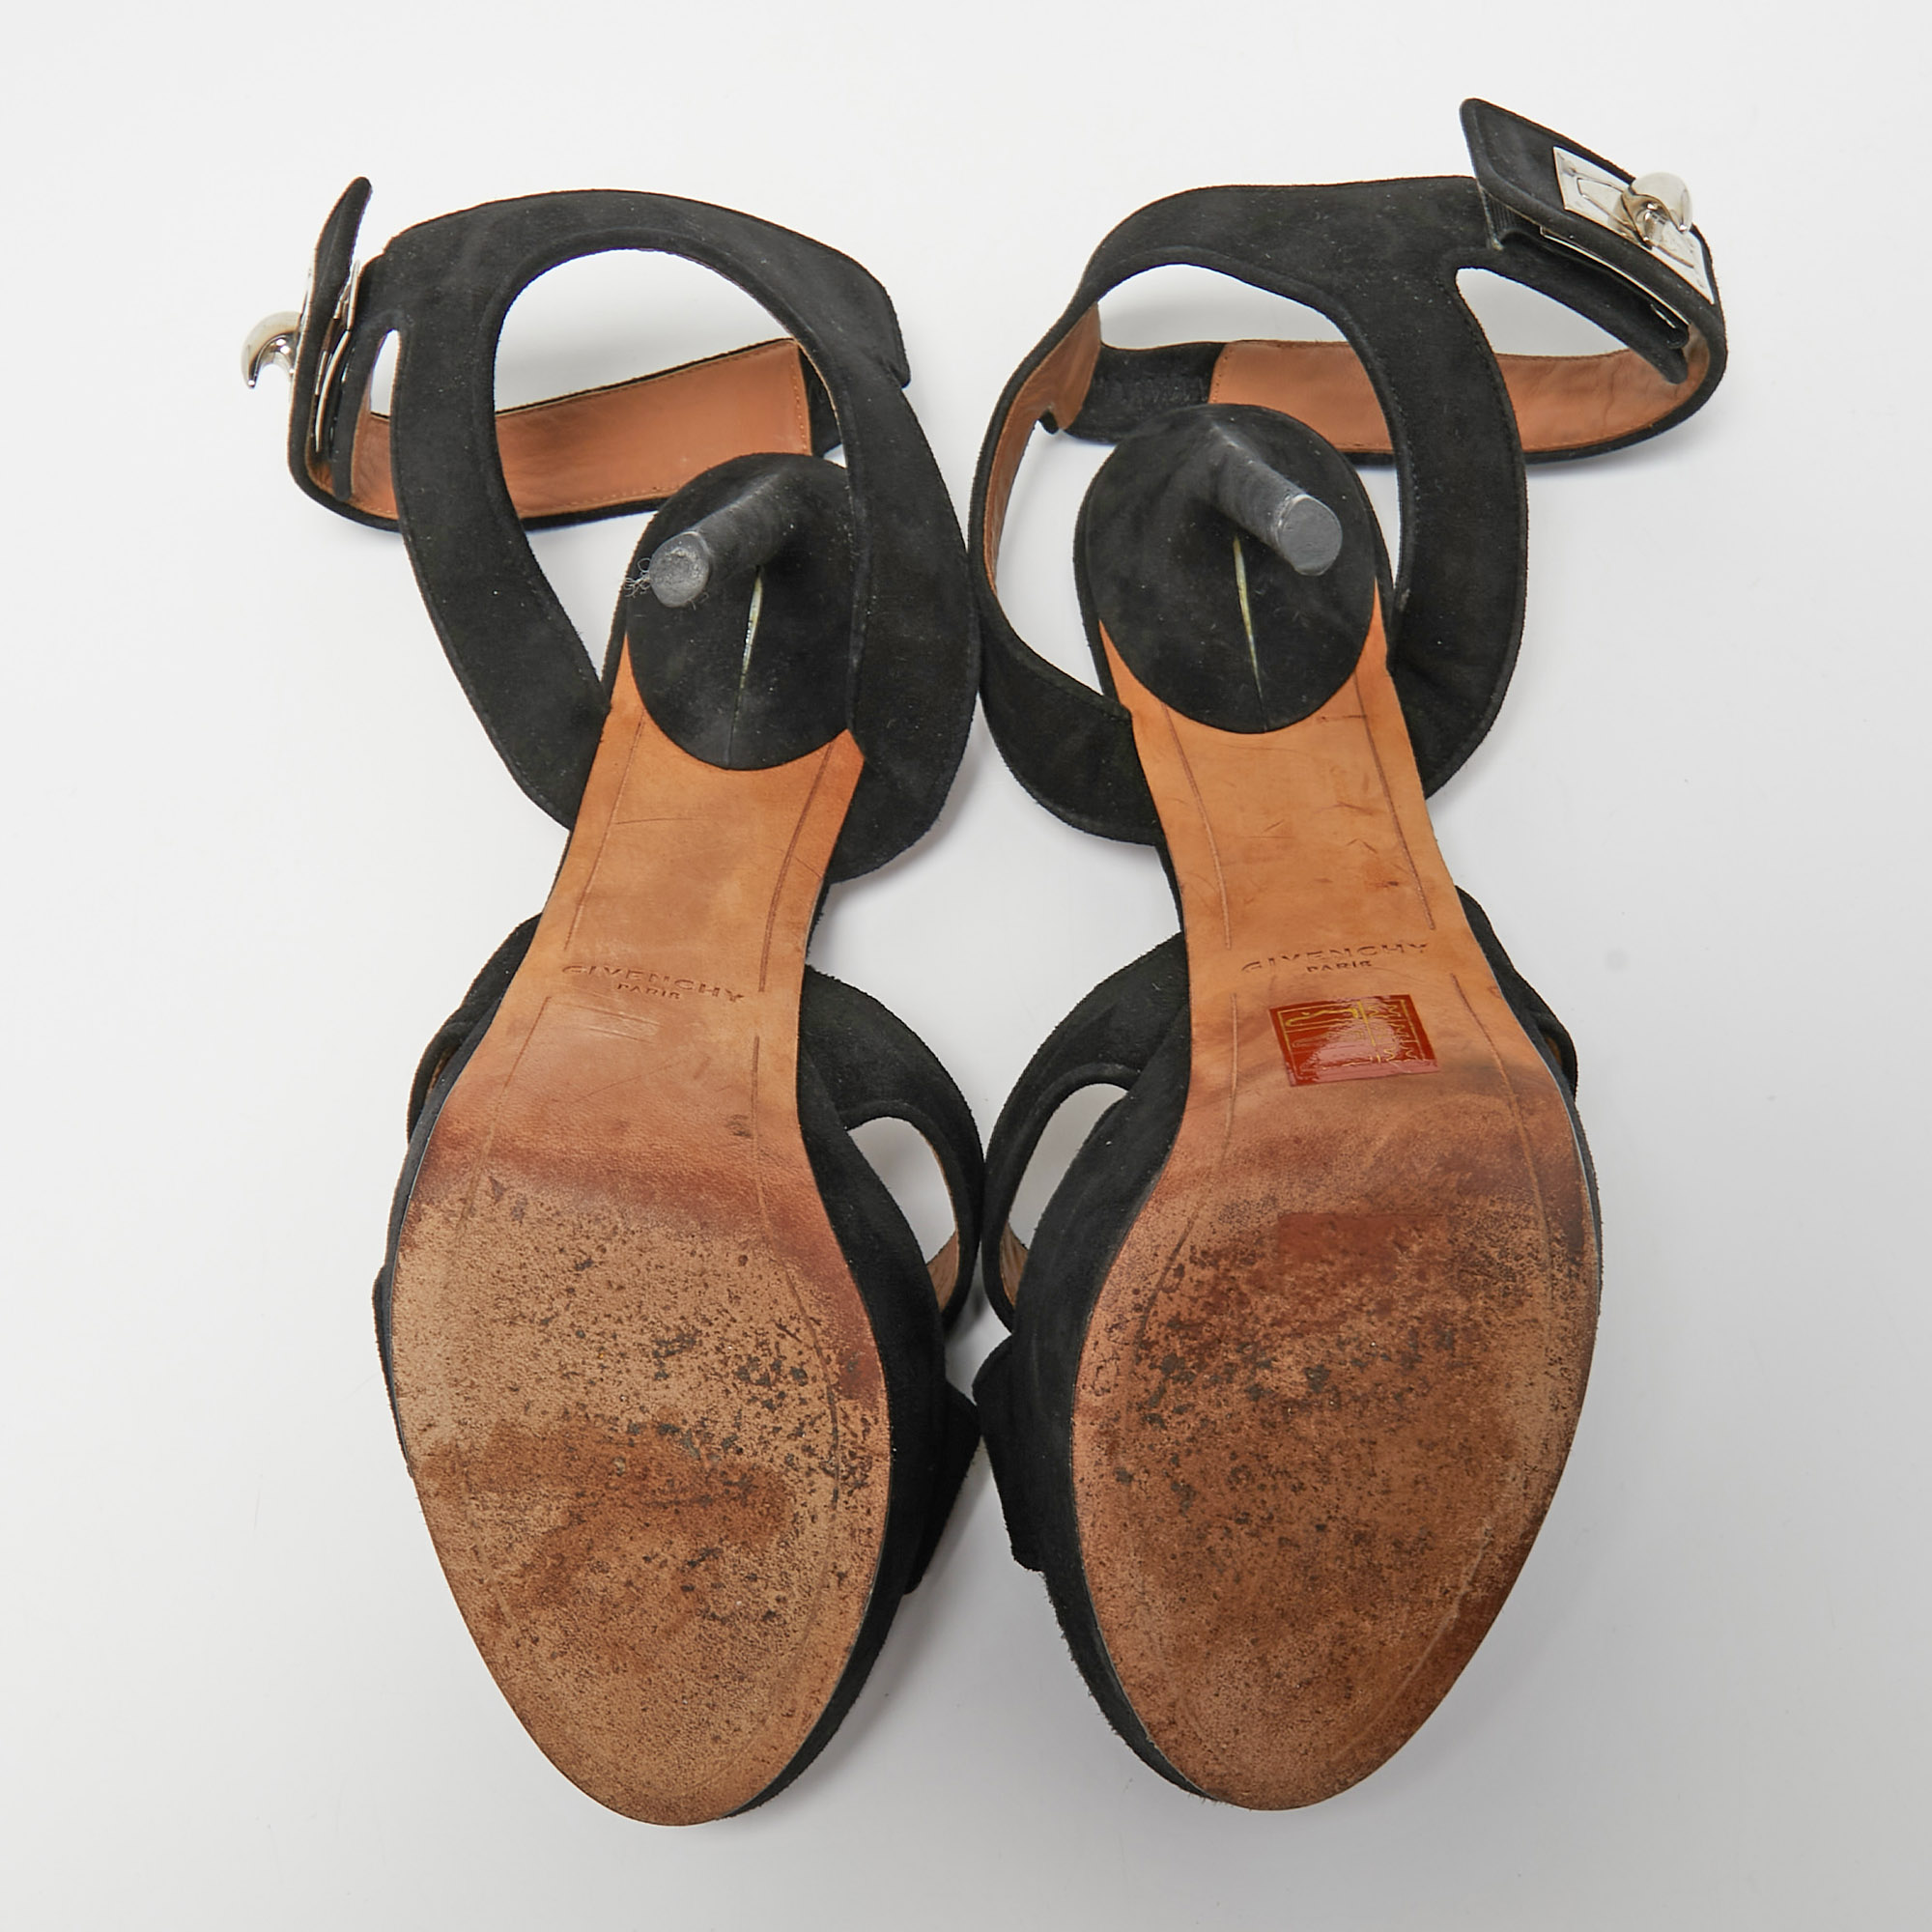 Givenchy Black Suede Shark Lock Ankle Strap Sandals Size 39